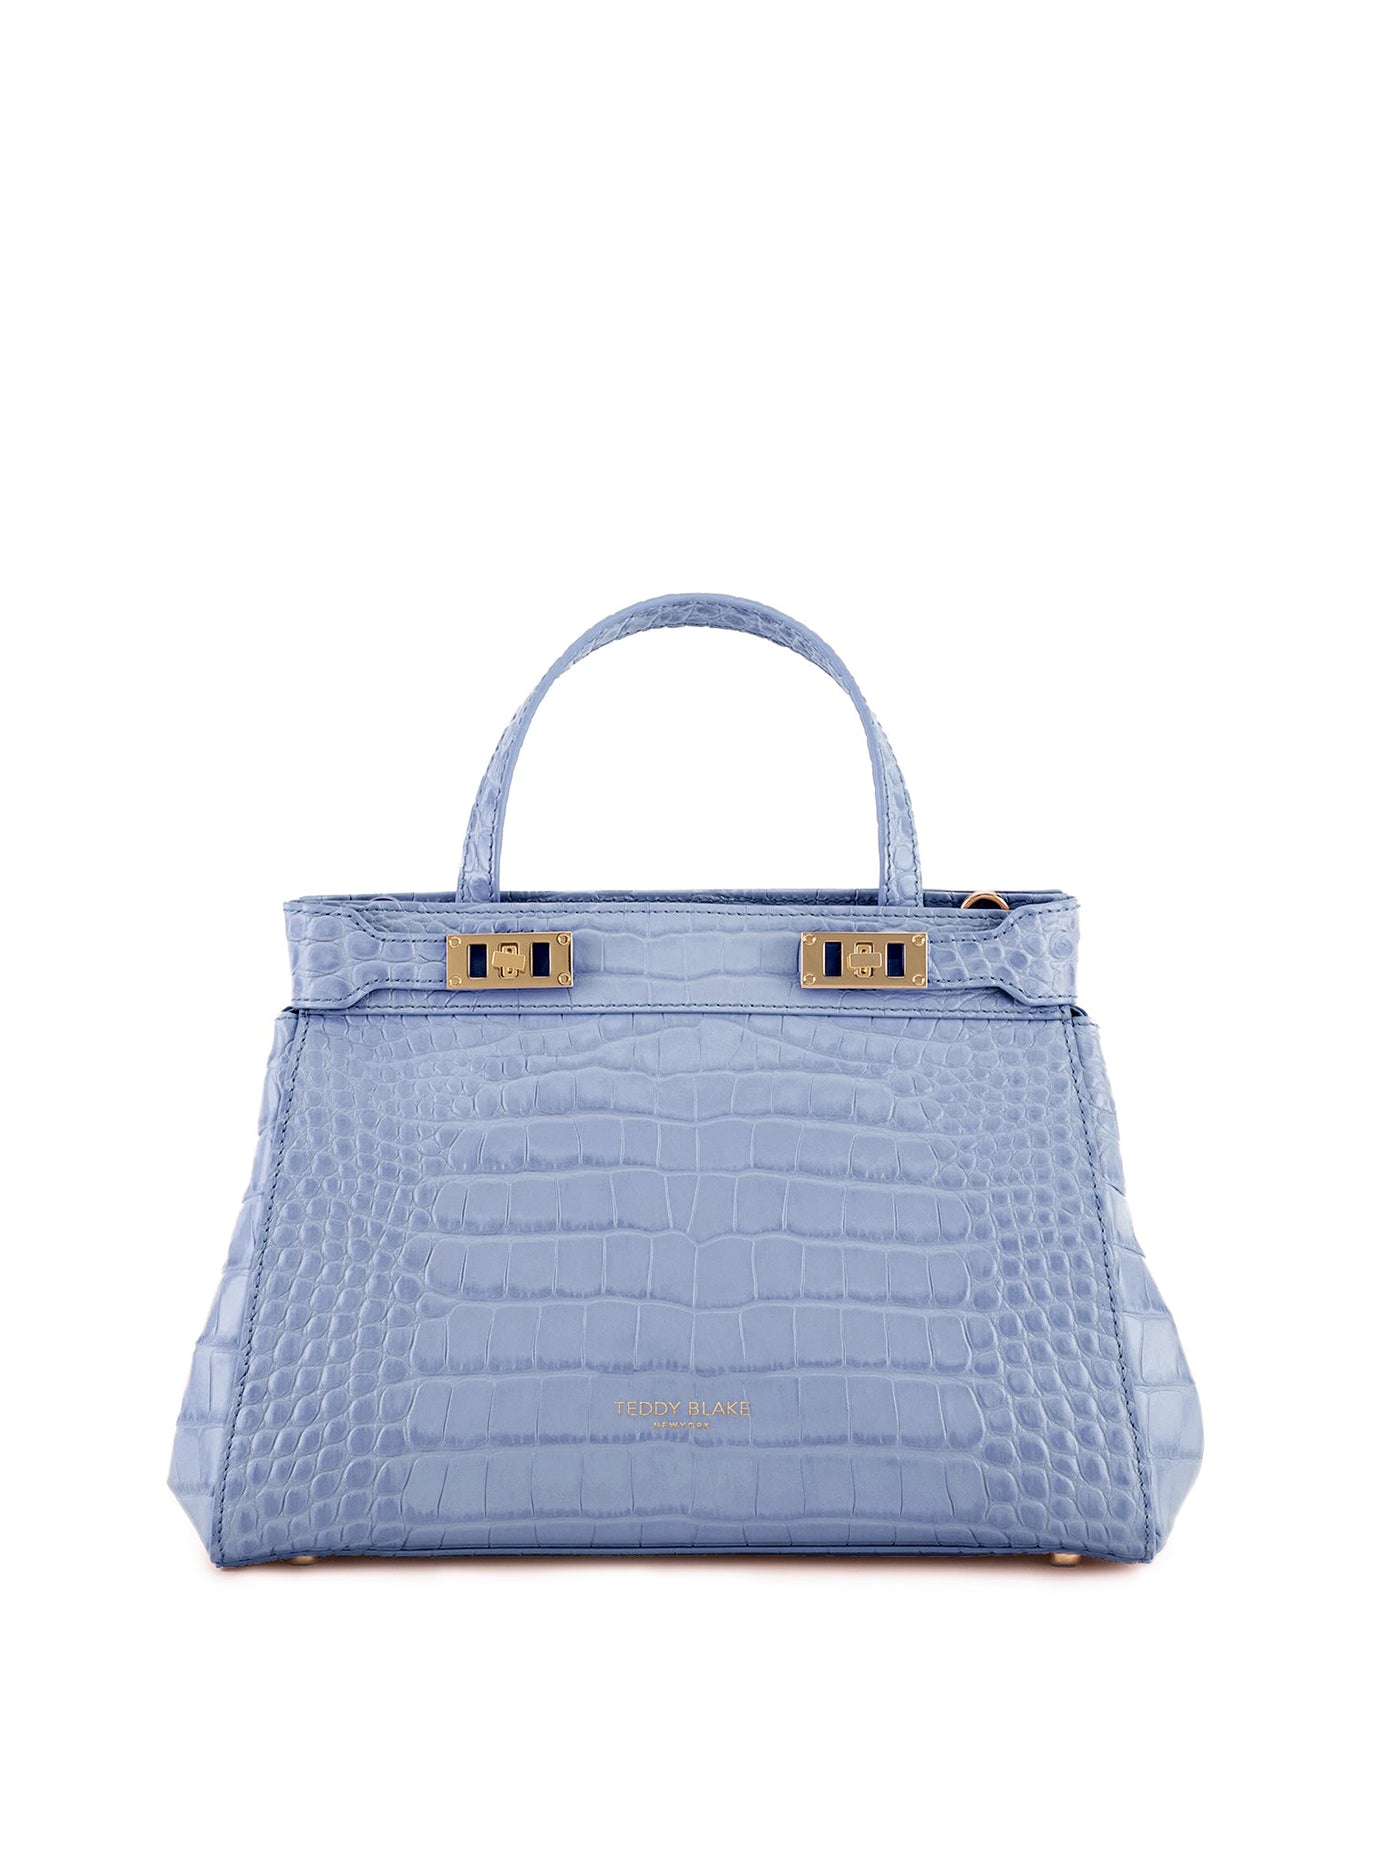 Italian Handbag Designer Teddy Blake